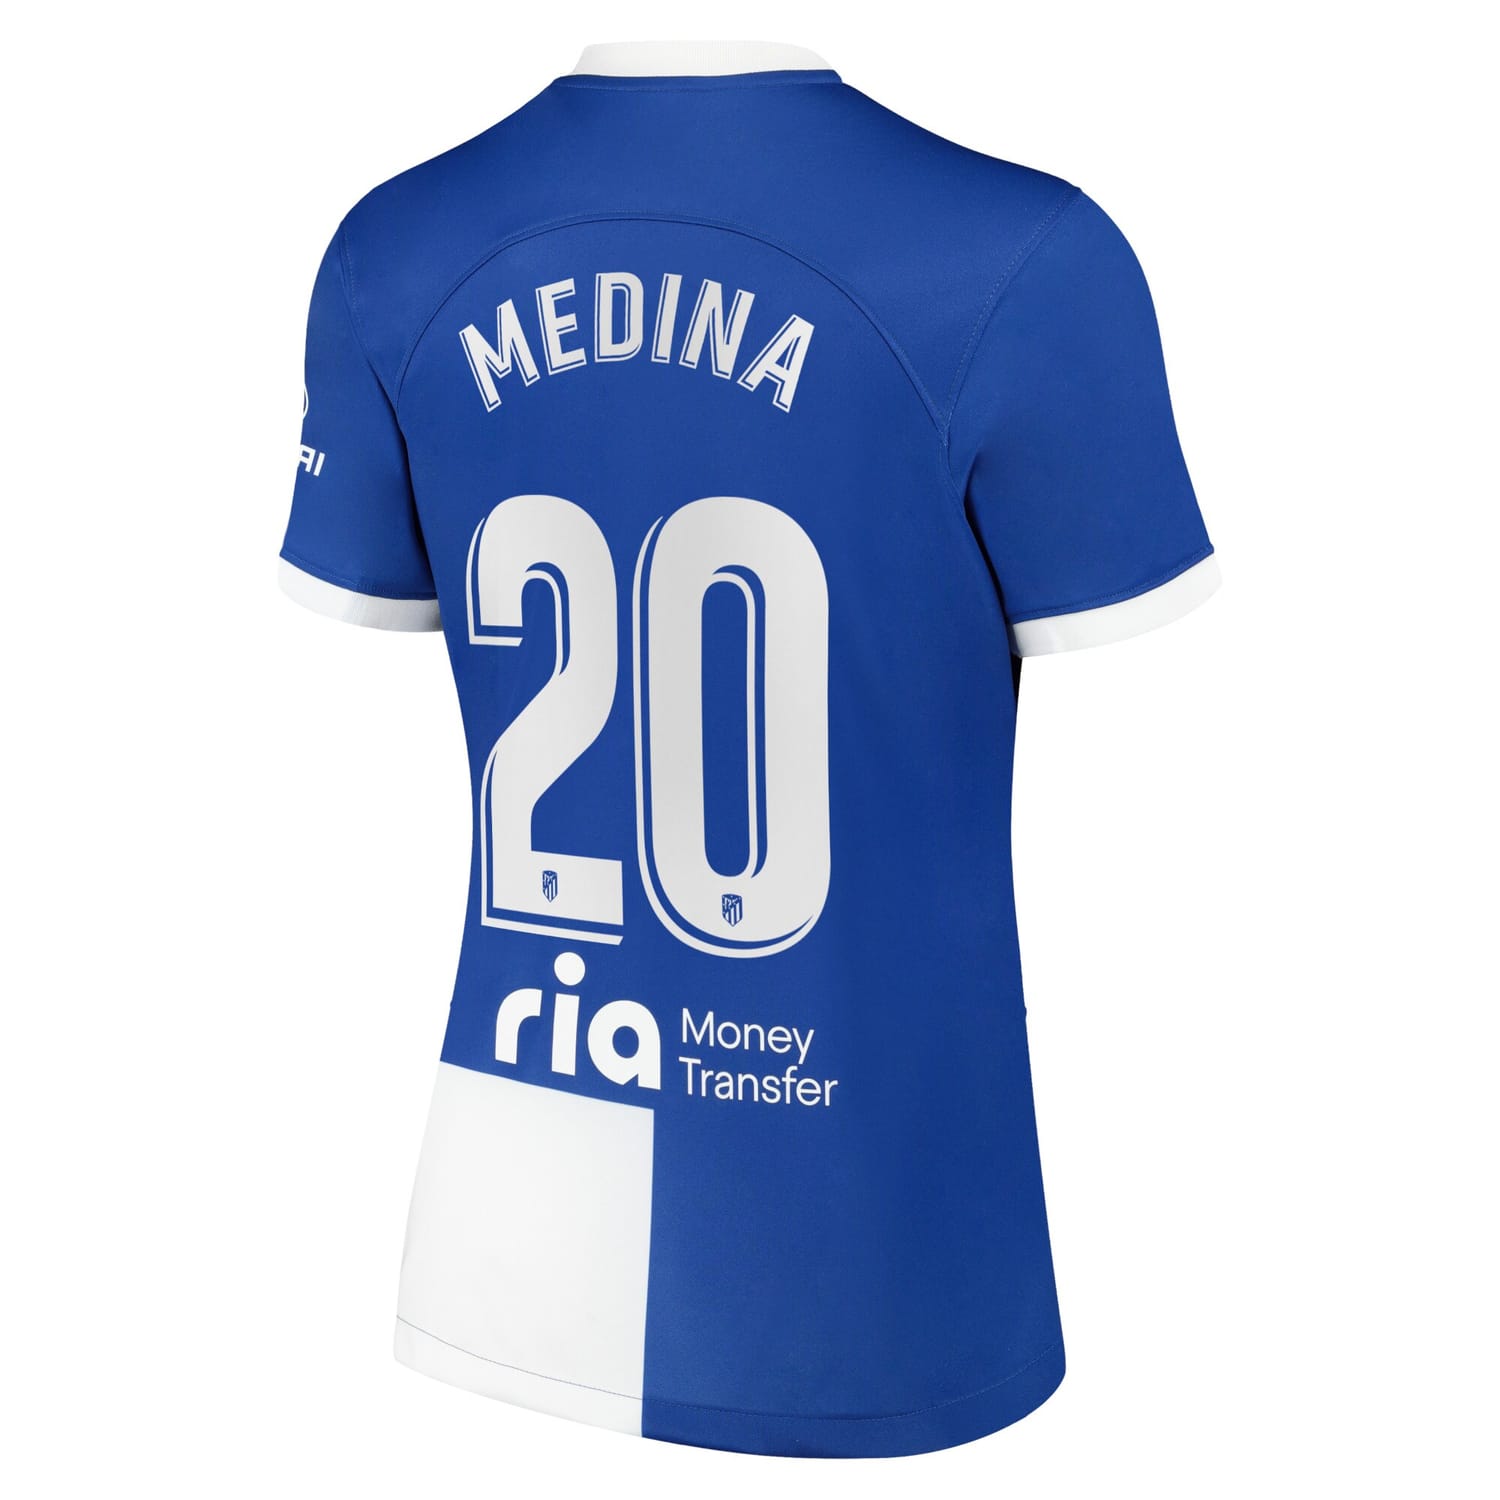 La Liga Atletico de Madrid Jersey Shirt 2022-23 player Andrea Medina 20 printing for Women